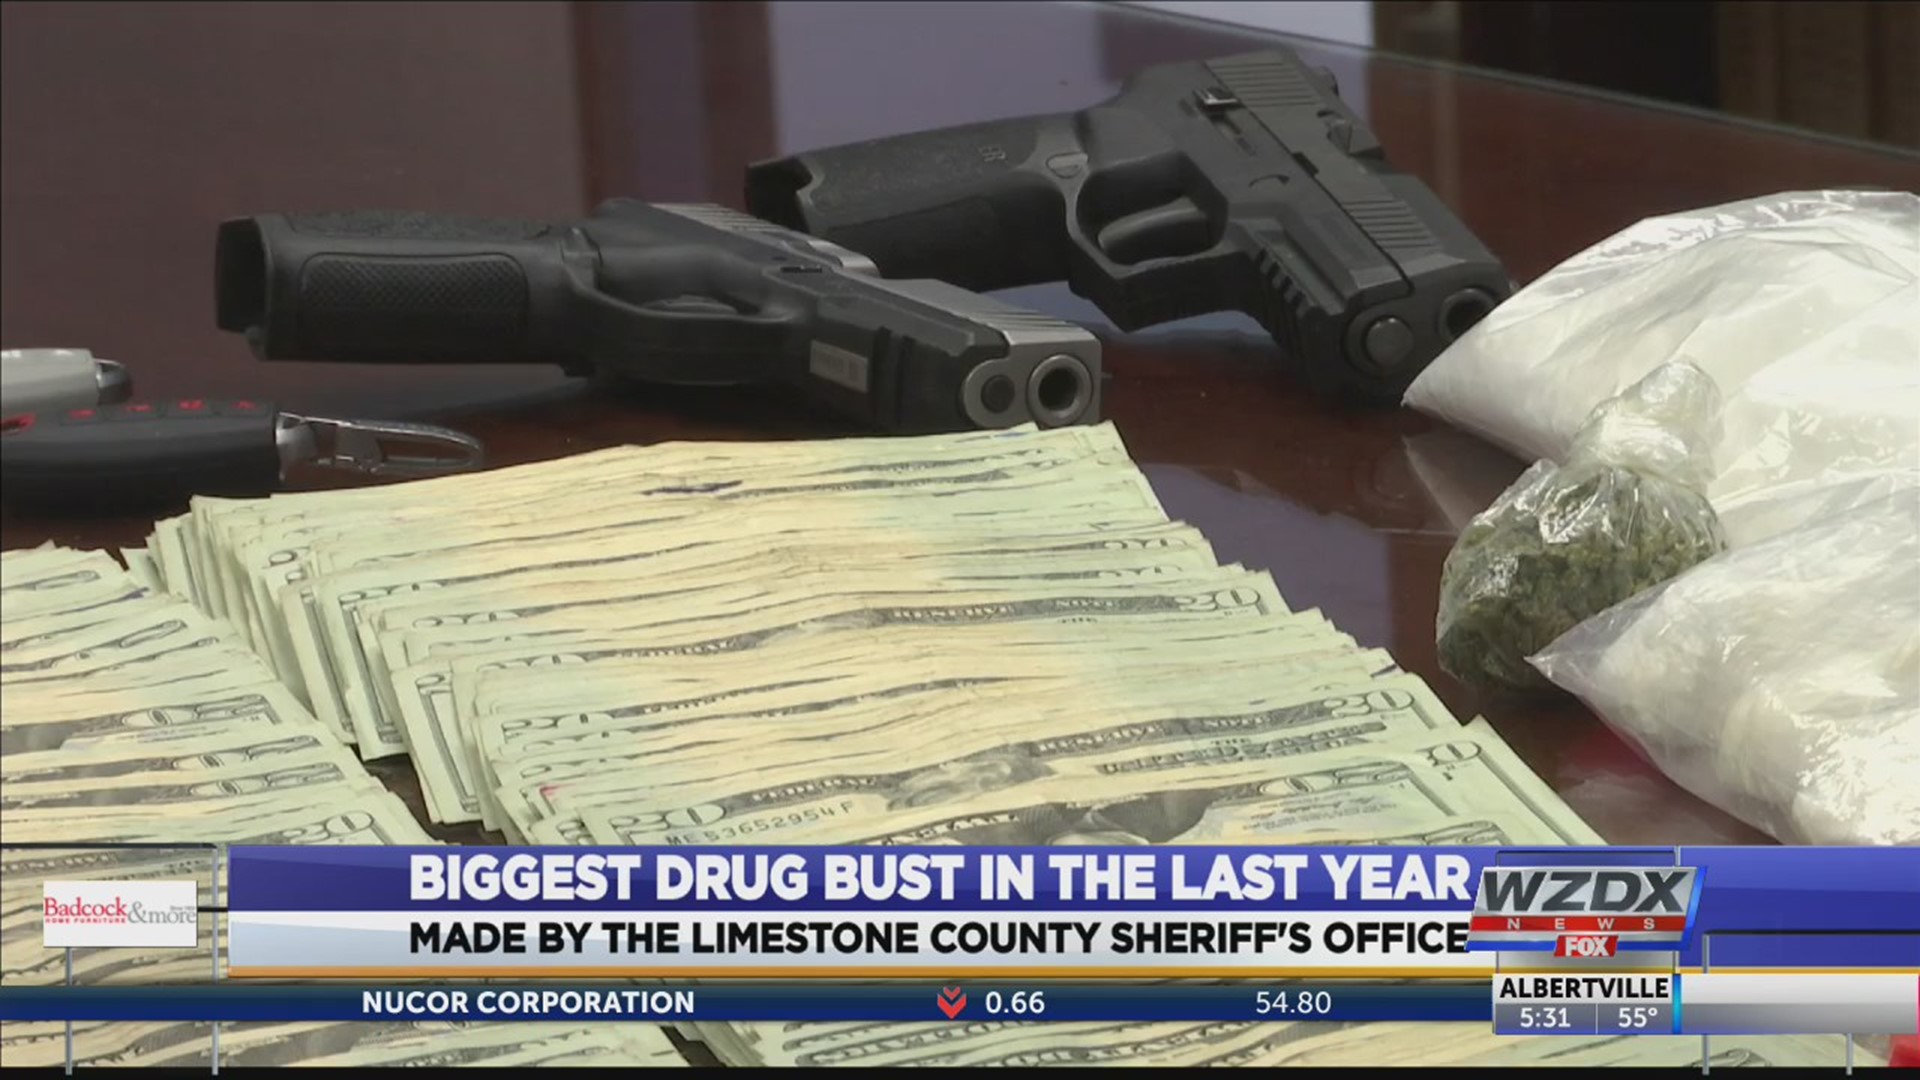 Major drug bust in Limestone County